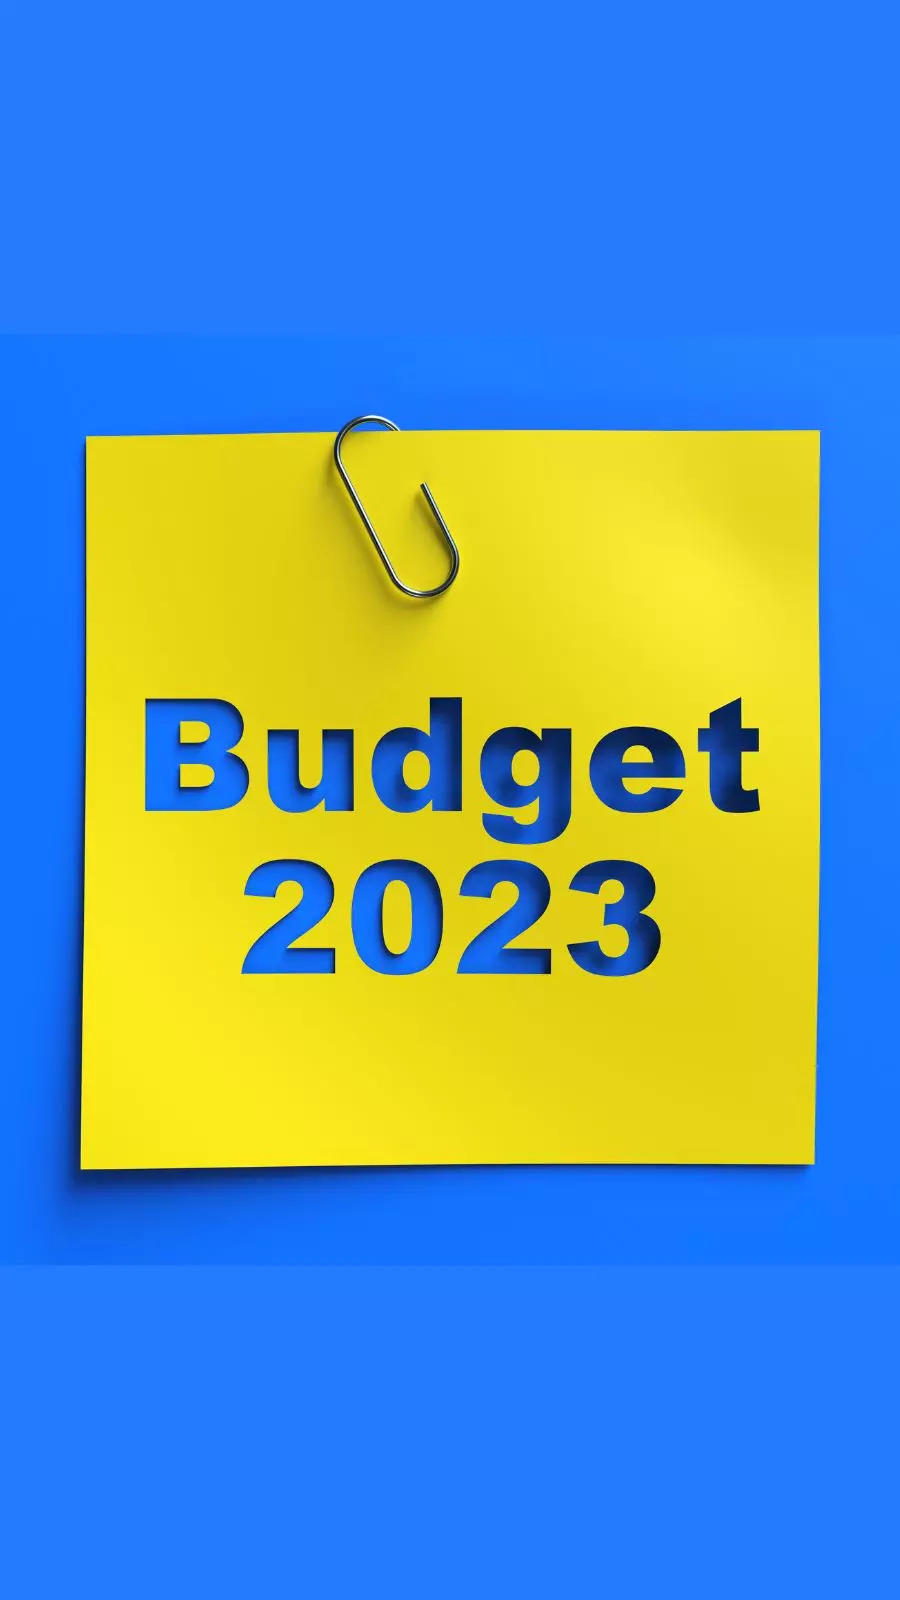 union budget 2023: budget builders: the a-team behind budget 2023| economictimes